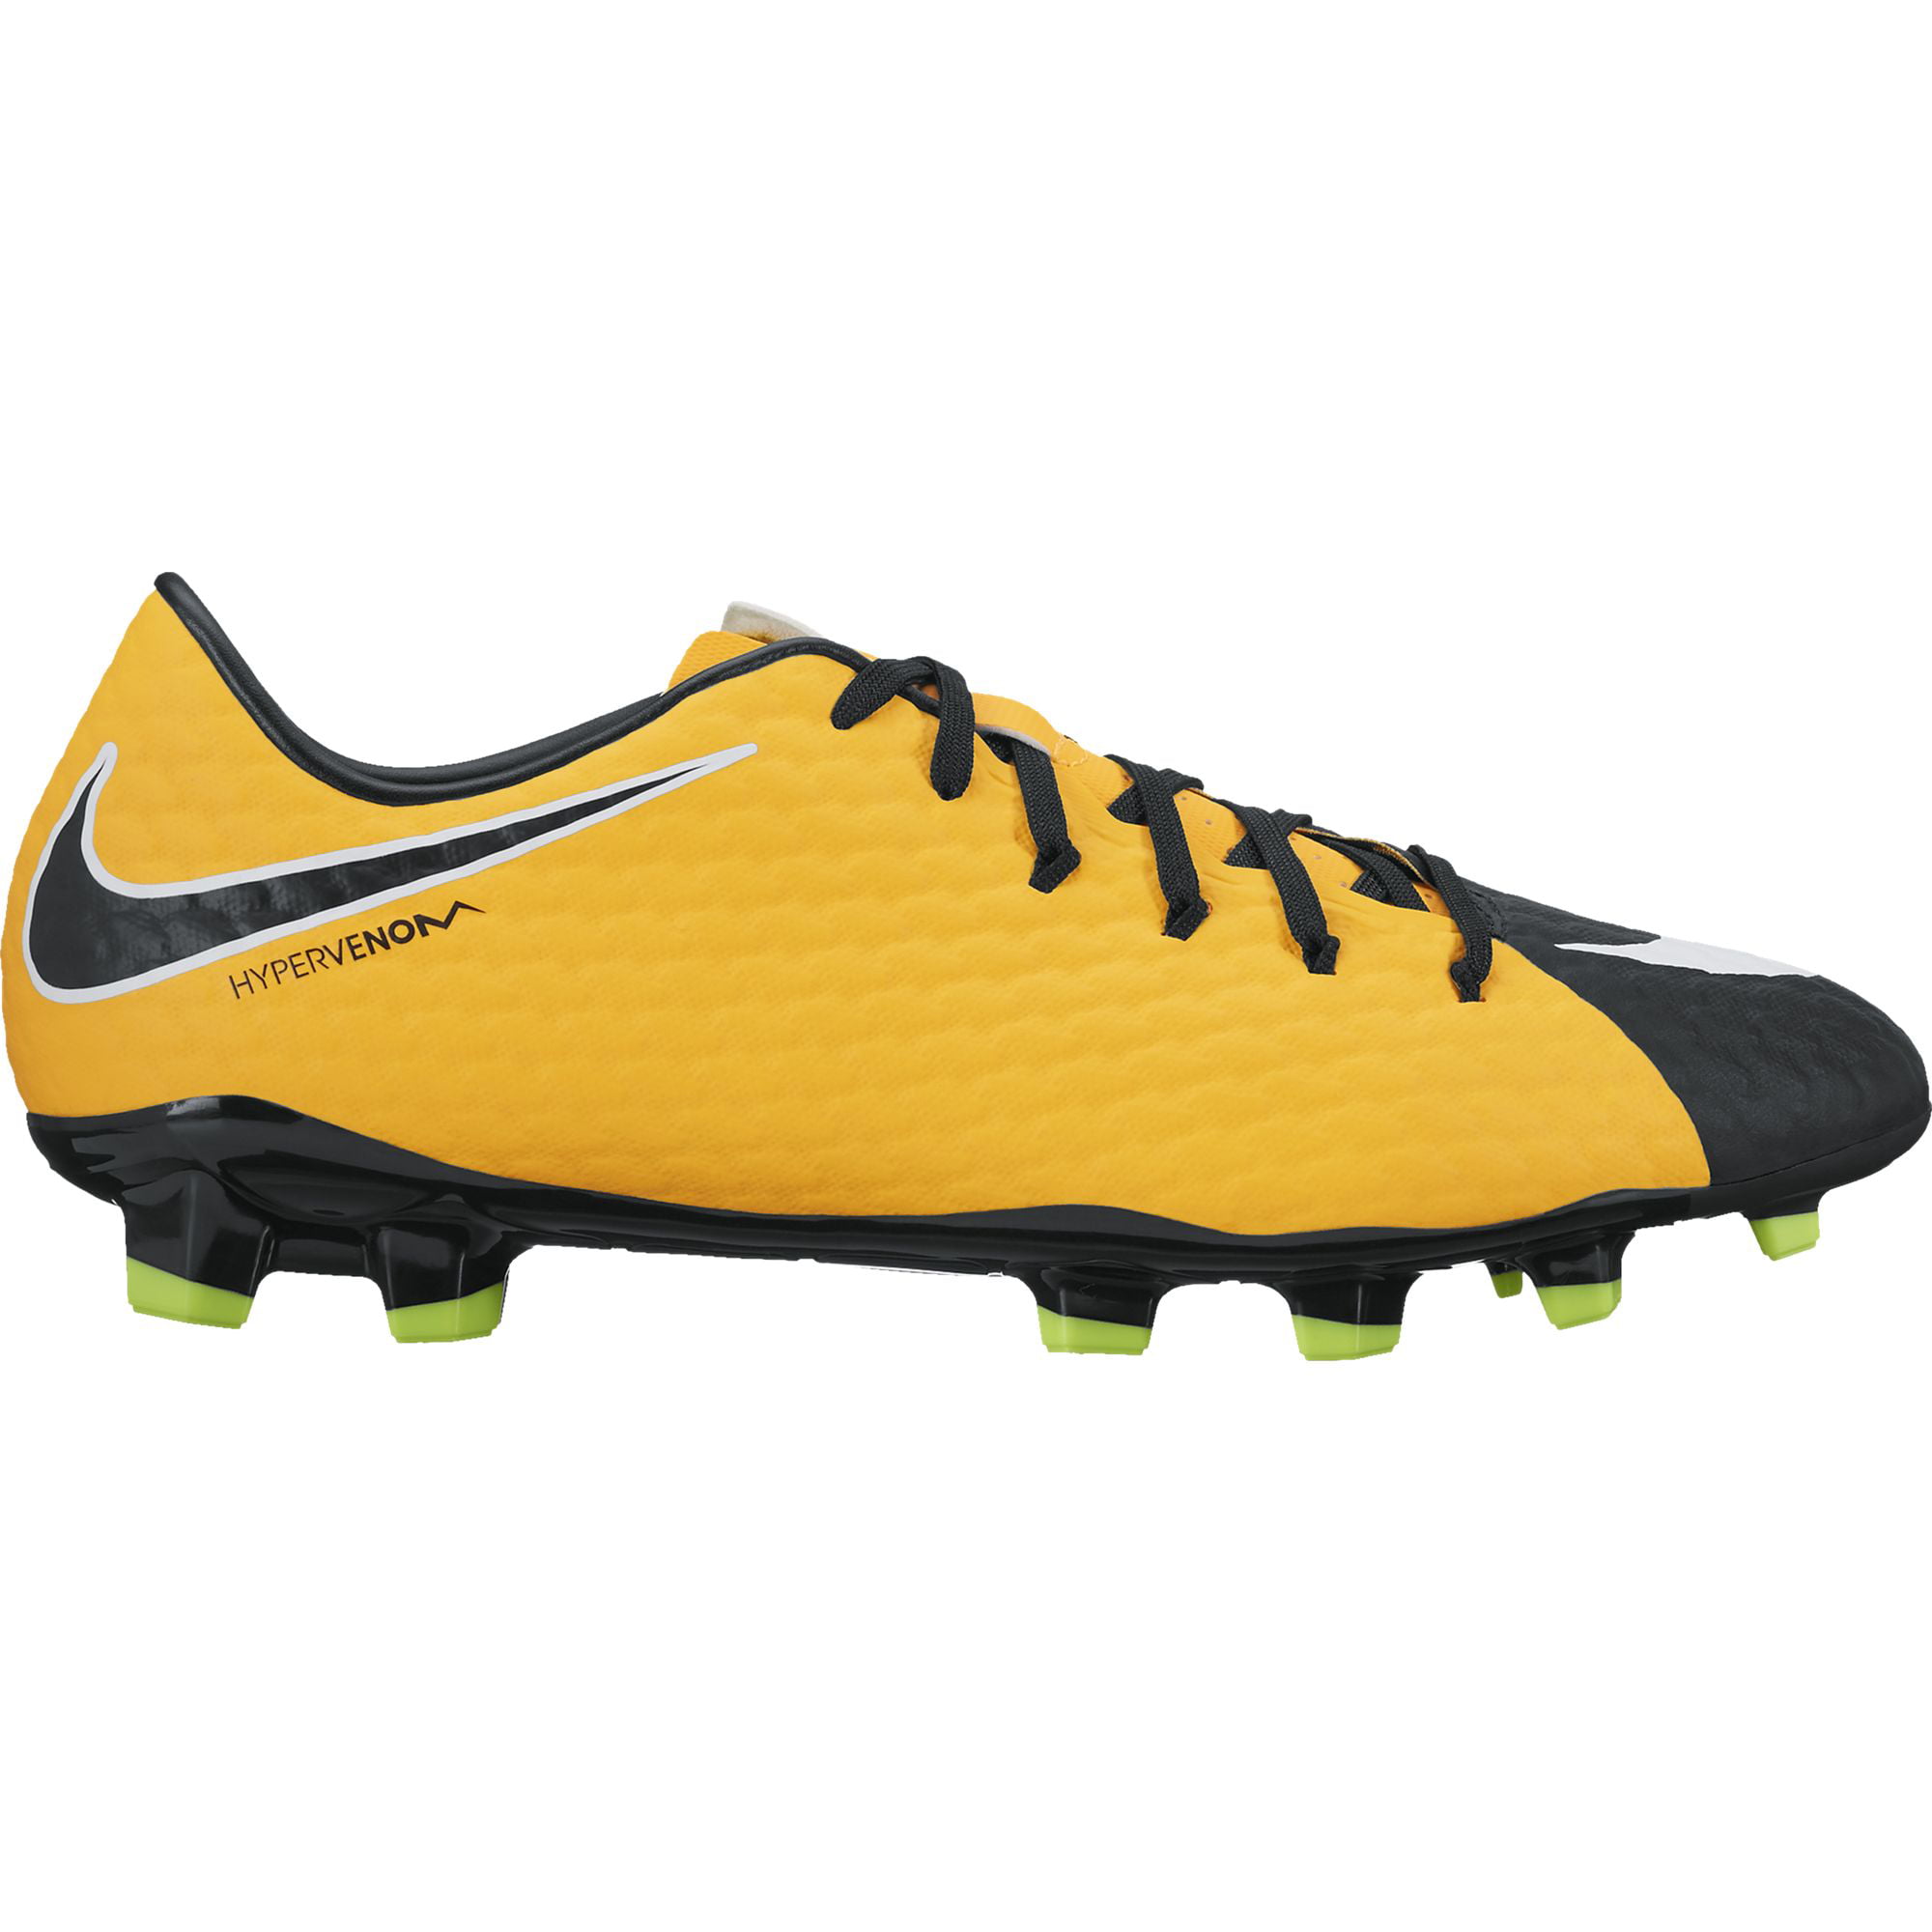 Men's Nike Hypervenom Phelon III FG Soccer Cleat Laser  Orange/White/Black/Volt - Walmart.com - Walmart.com